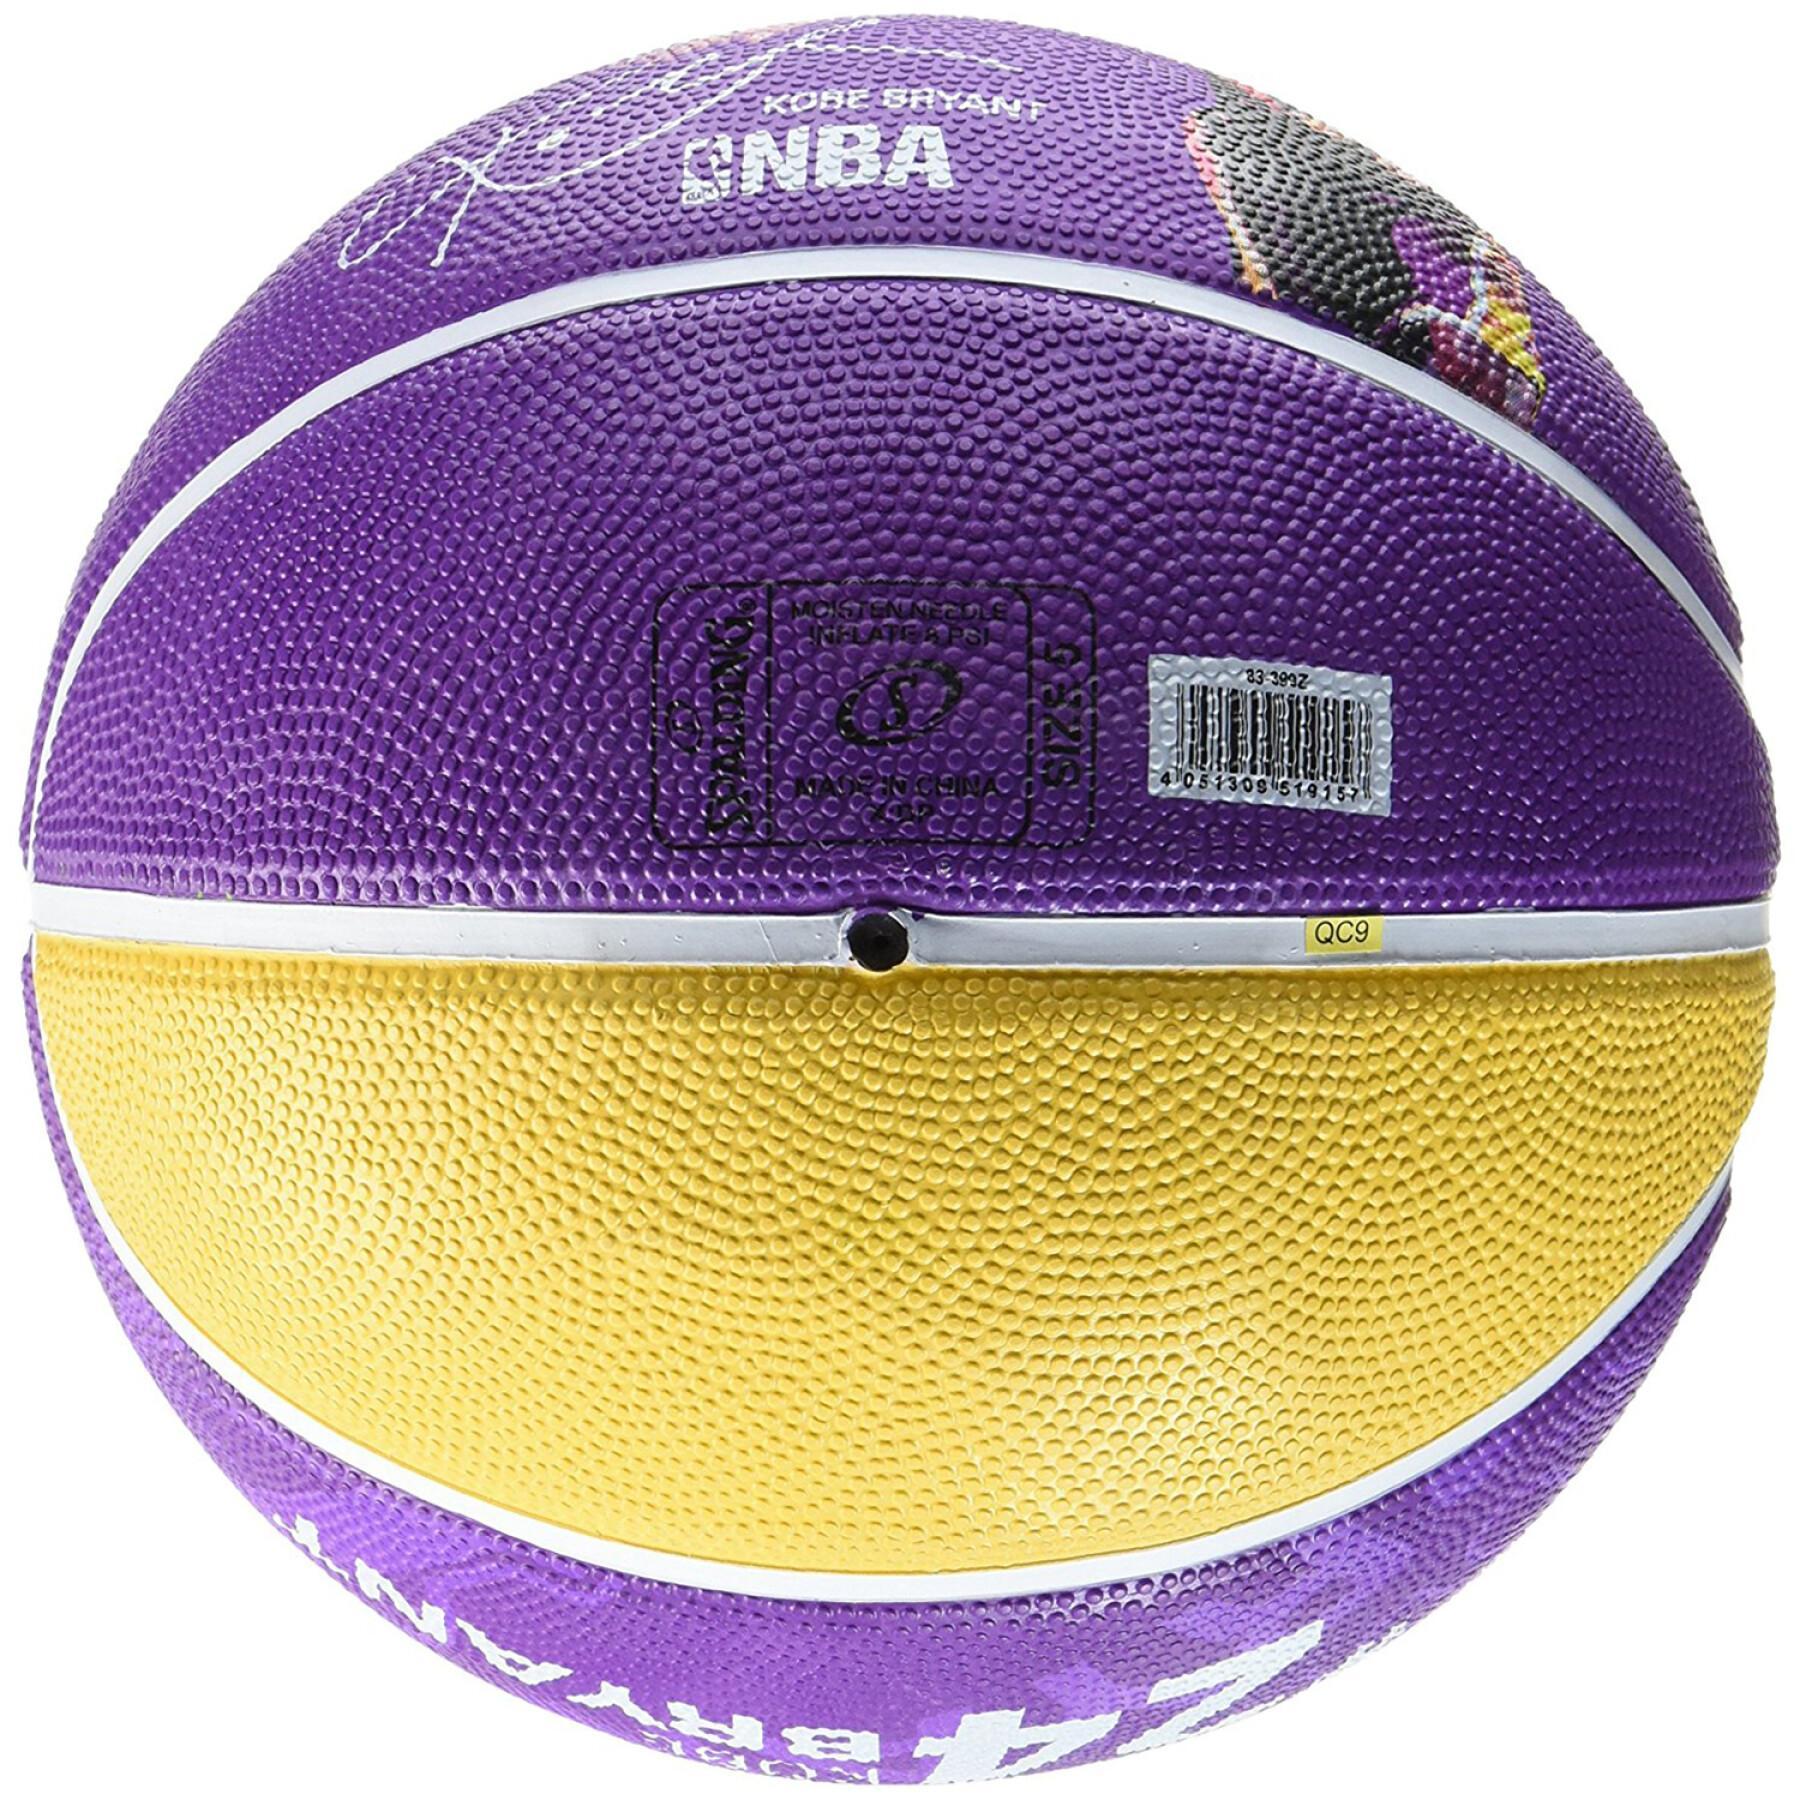 Balão Spalding Player Kobe Bryant